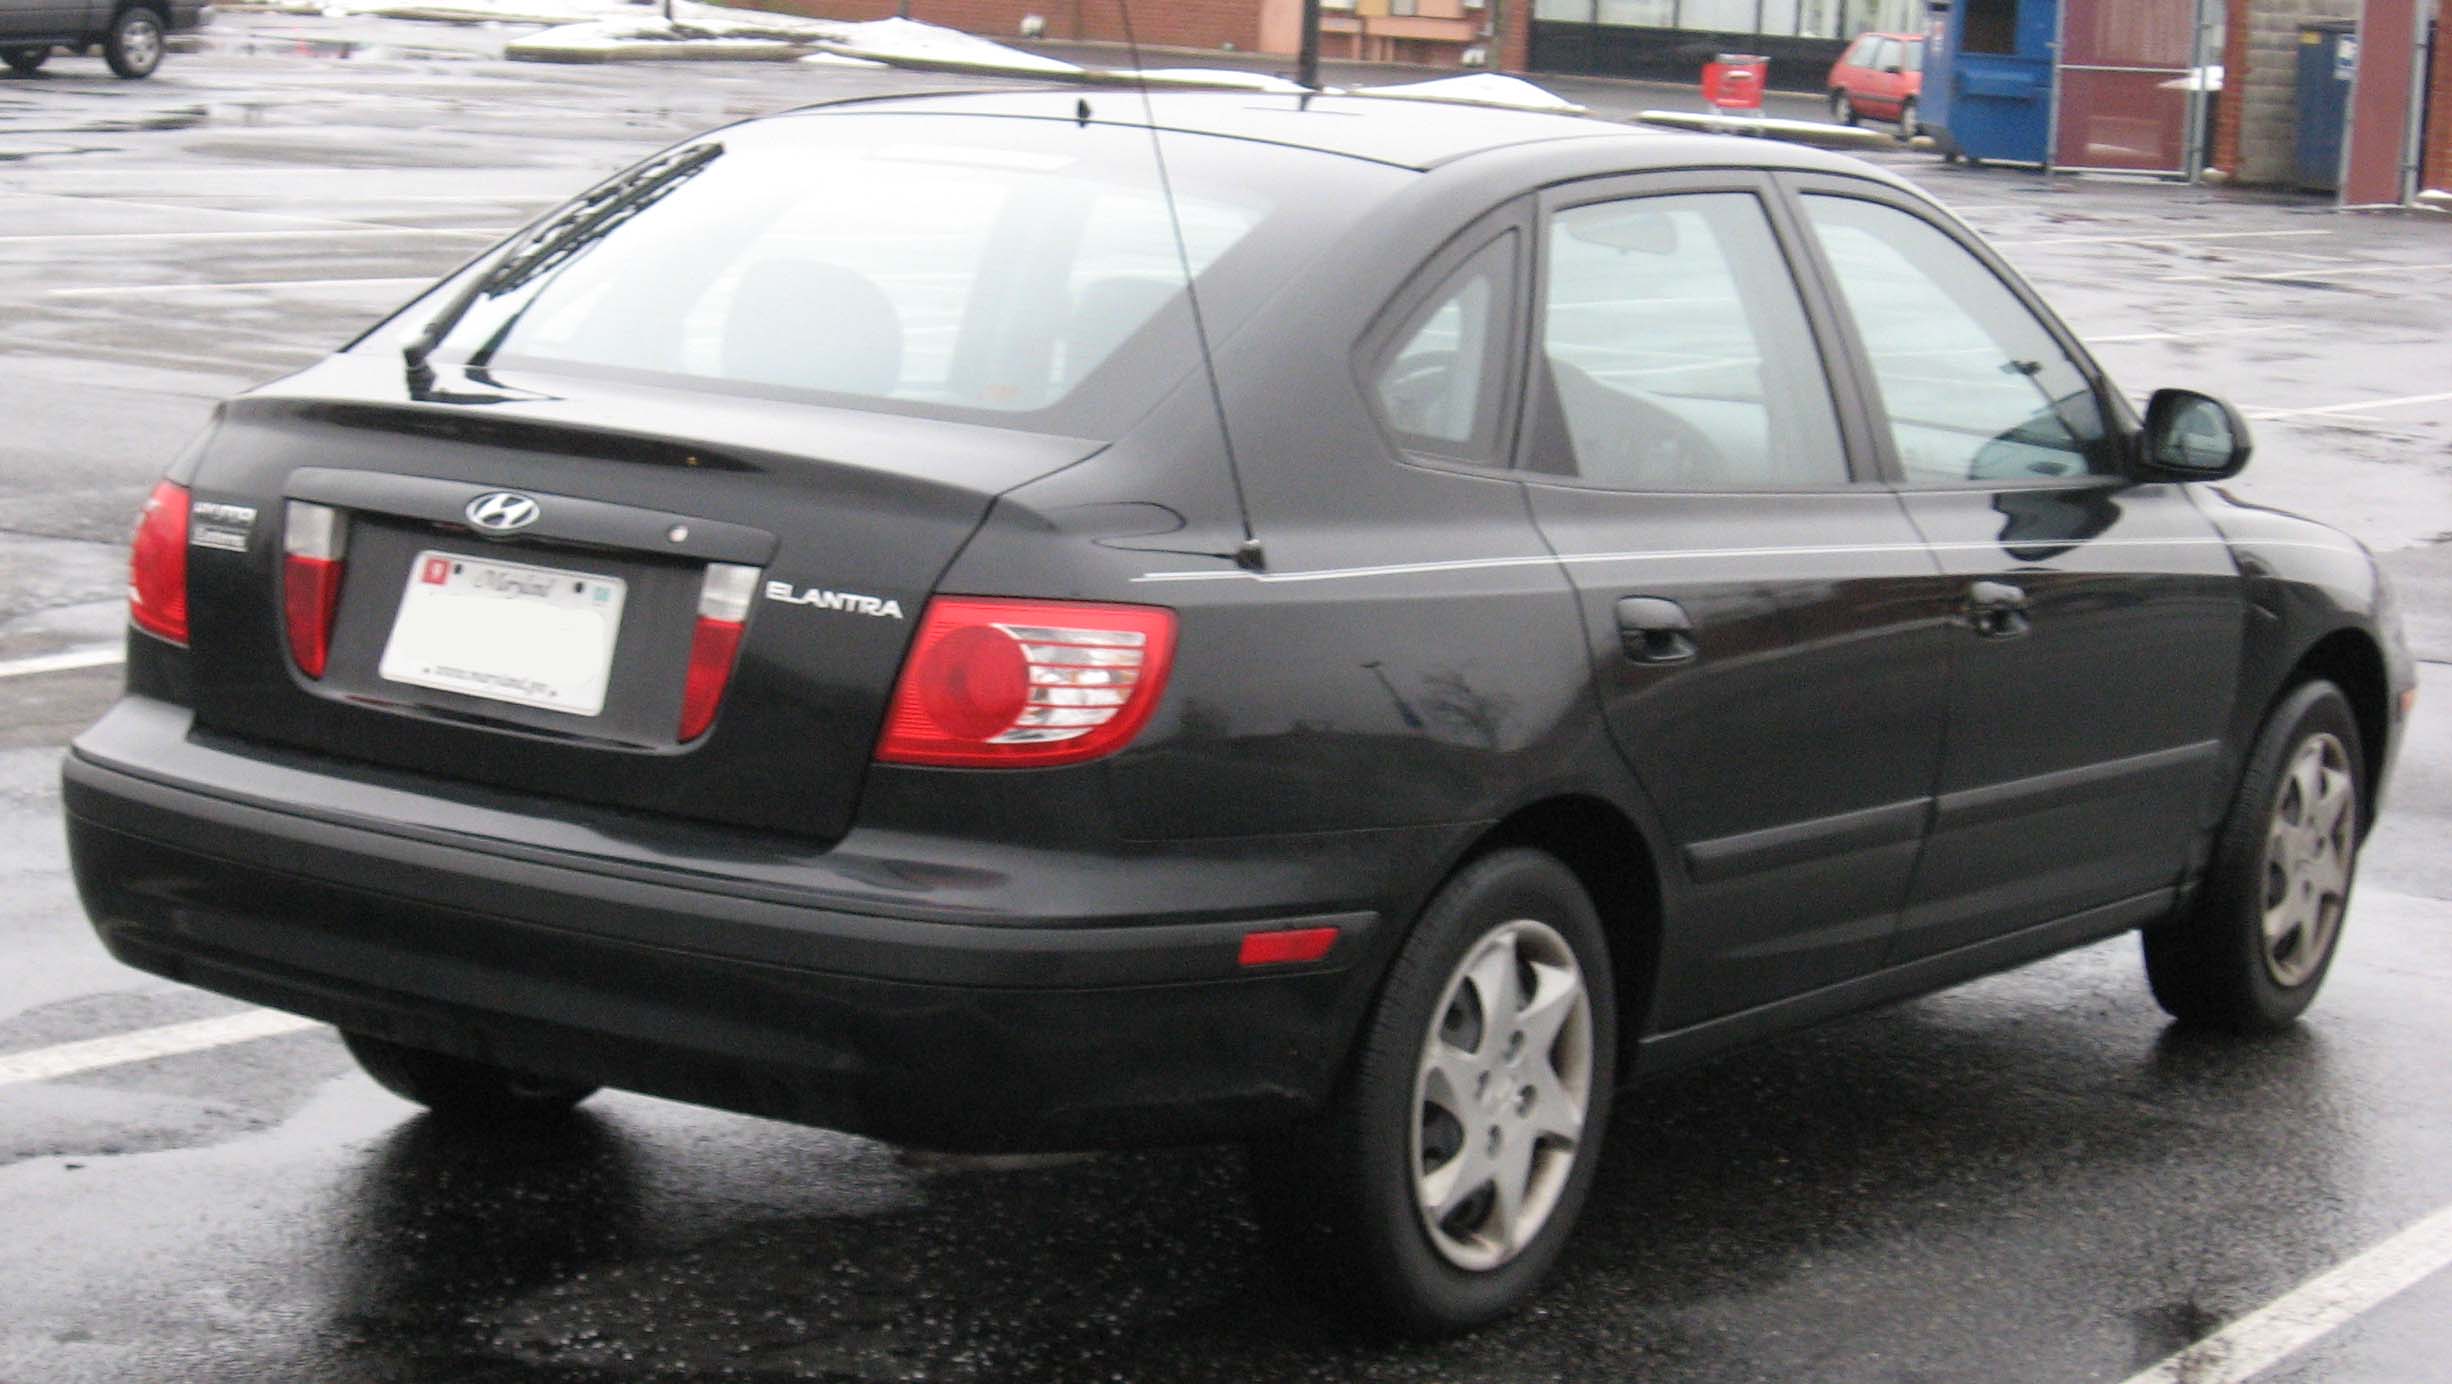 File:2002-2003 Hyundai Elantra hatchback.jpg - Wikimedia Commons